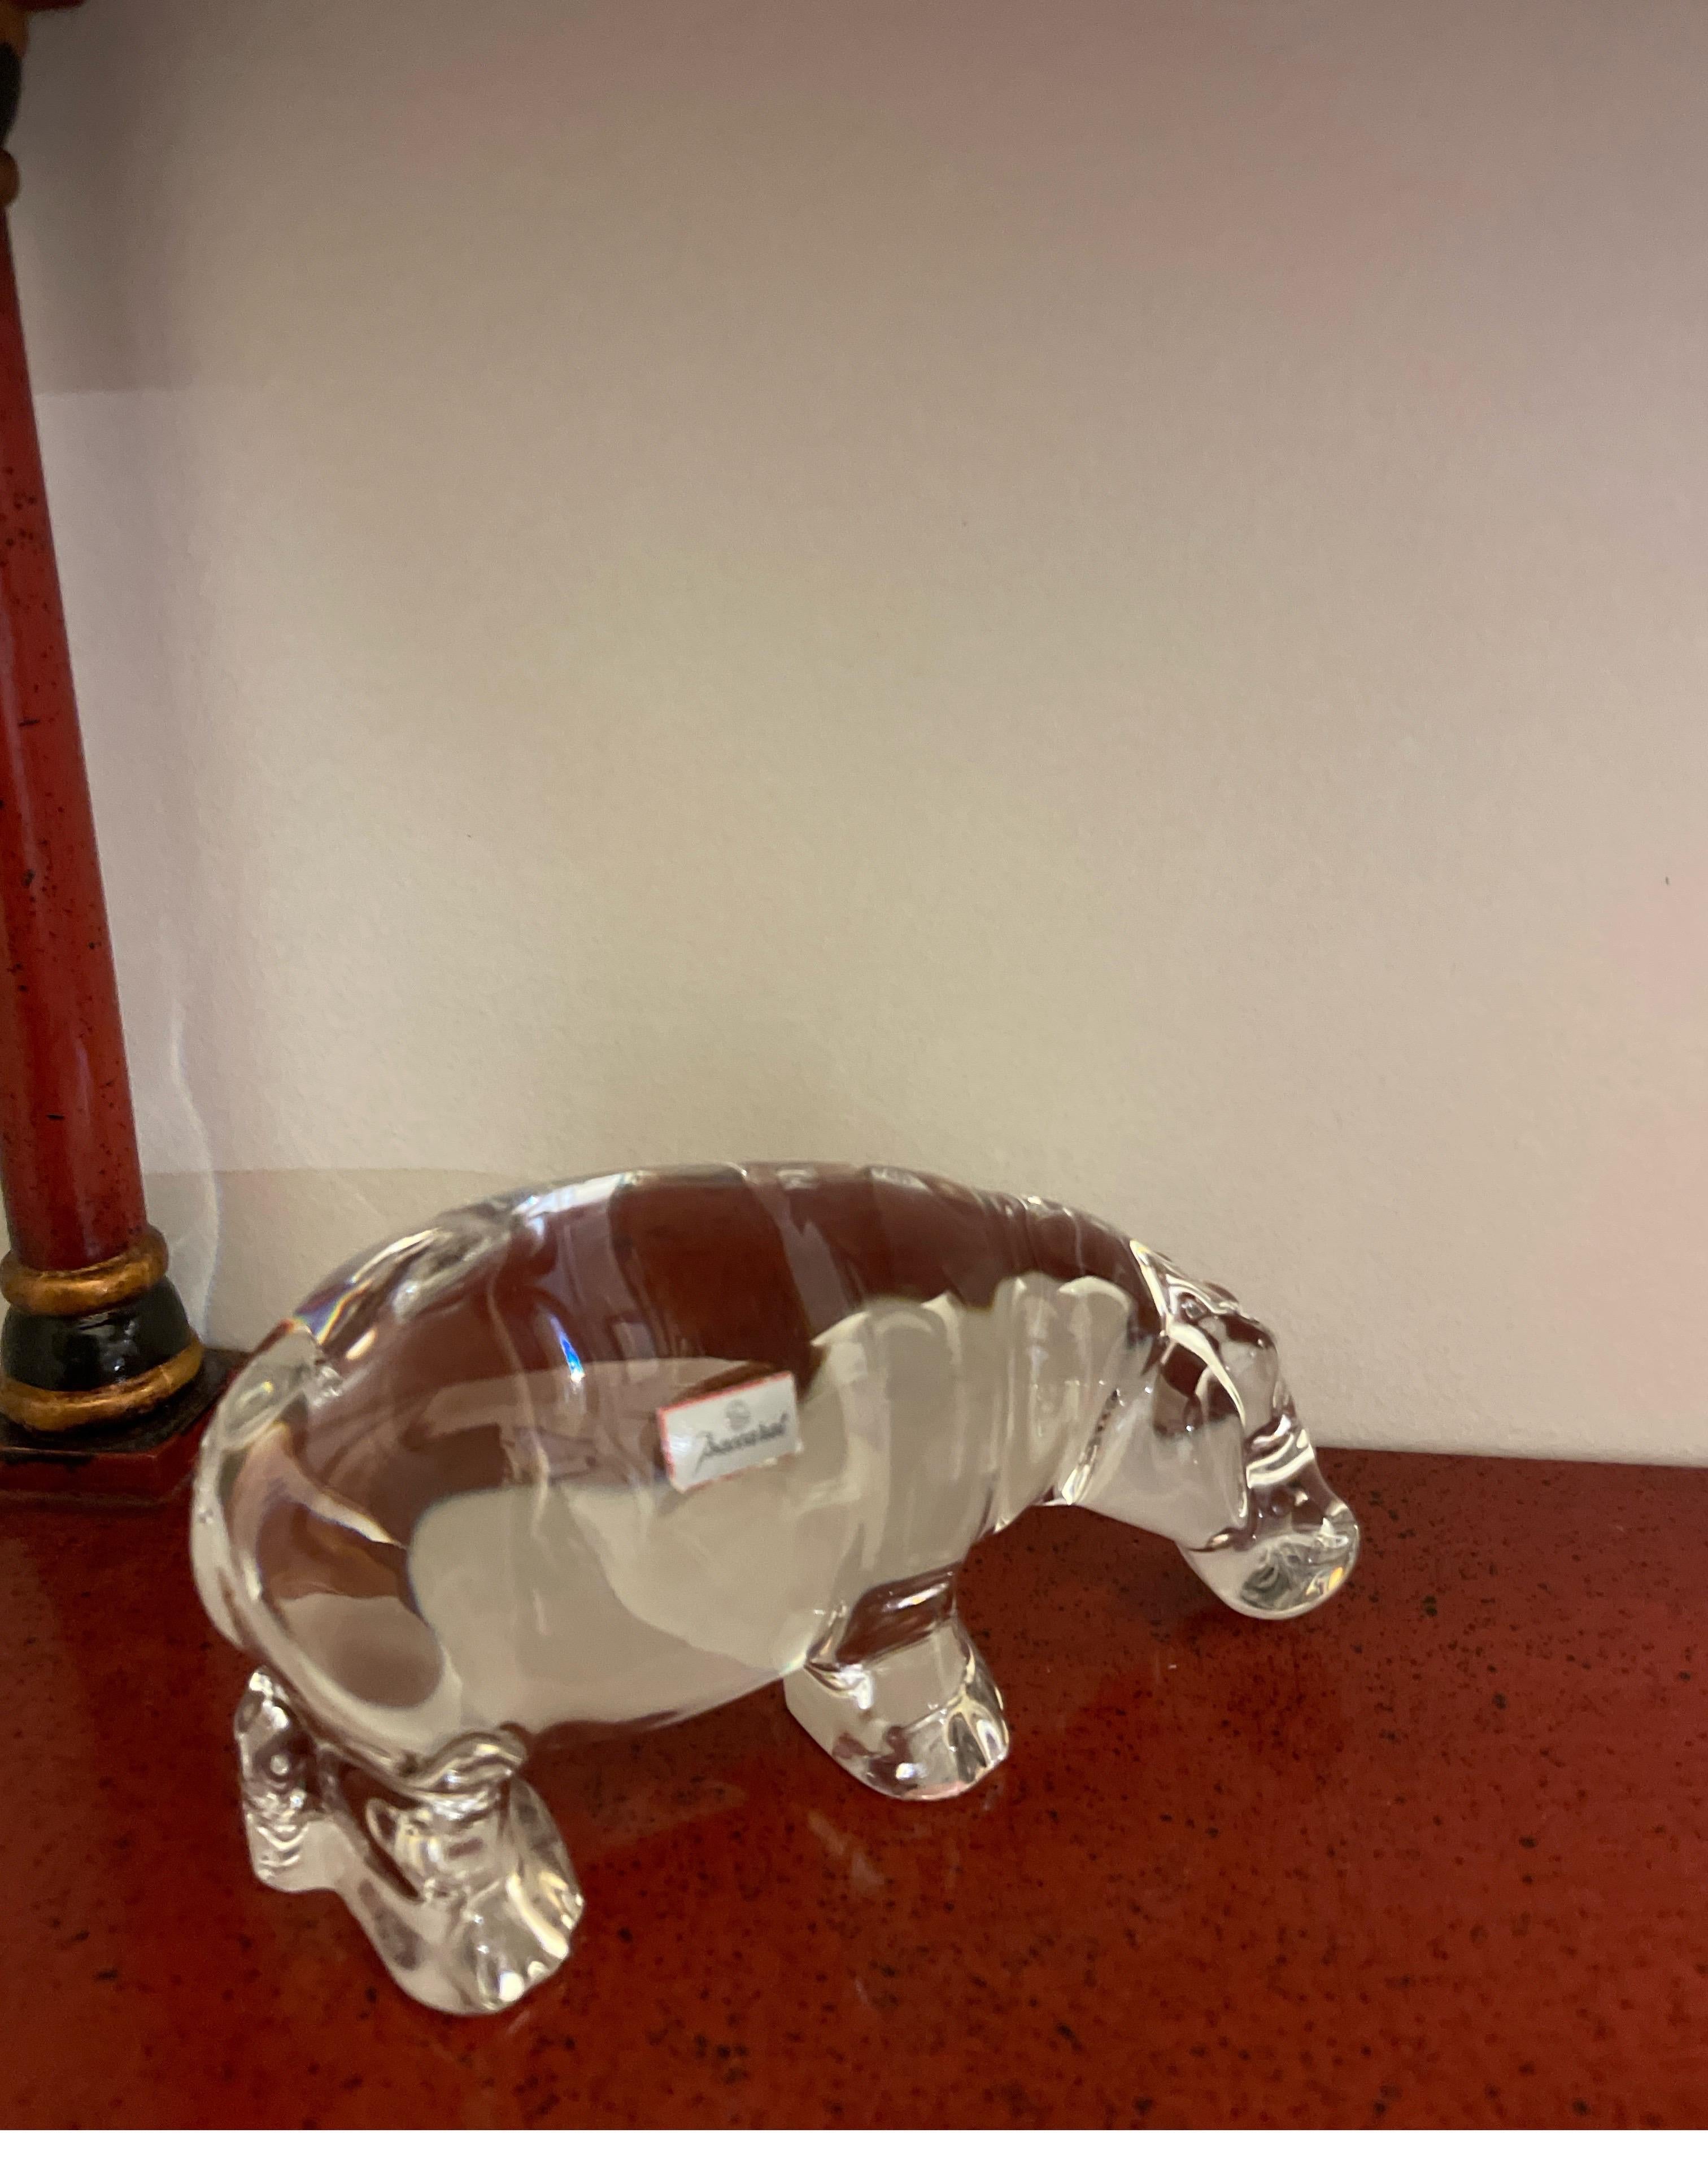 Baccarat Crystal Hippopotamus figurine / paperweight.